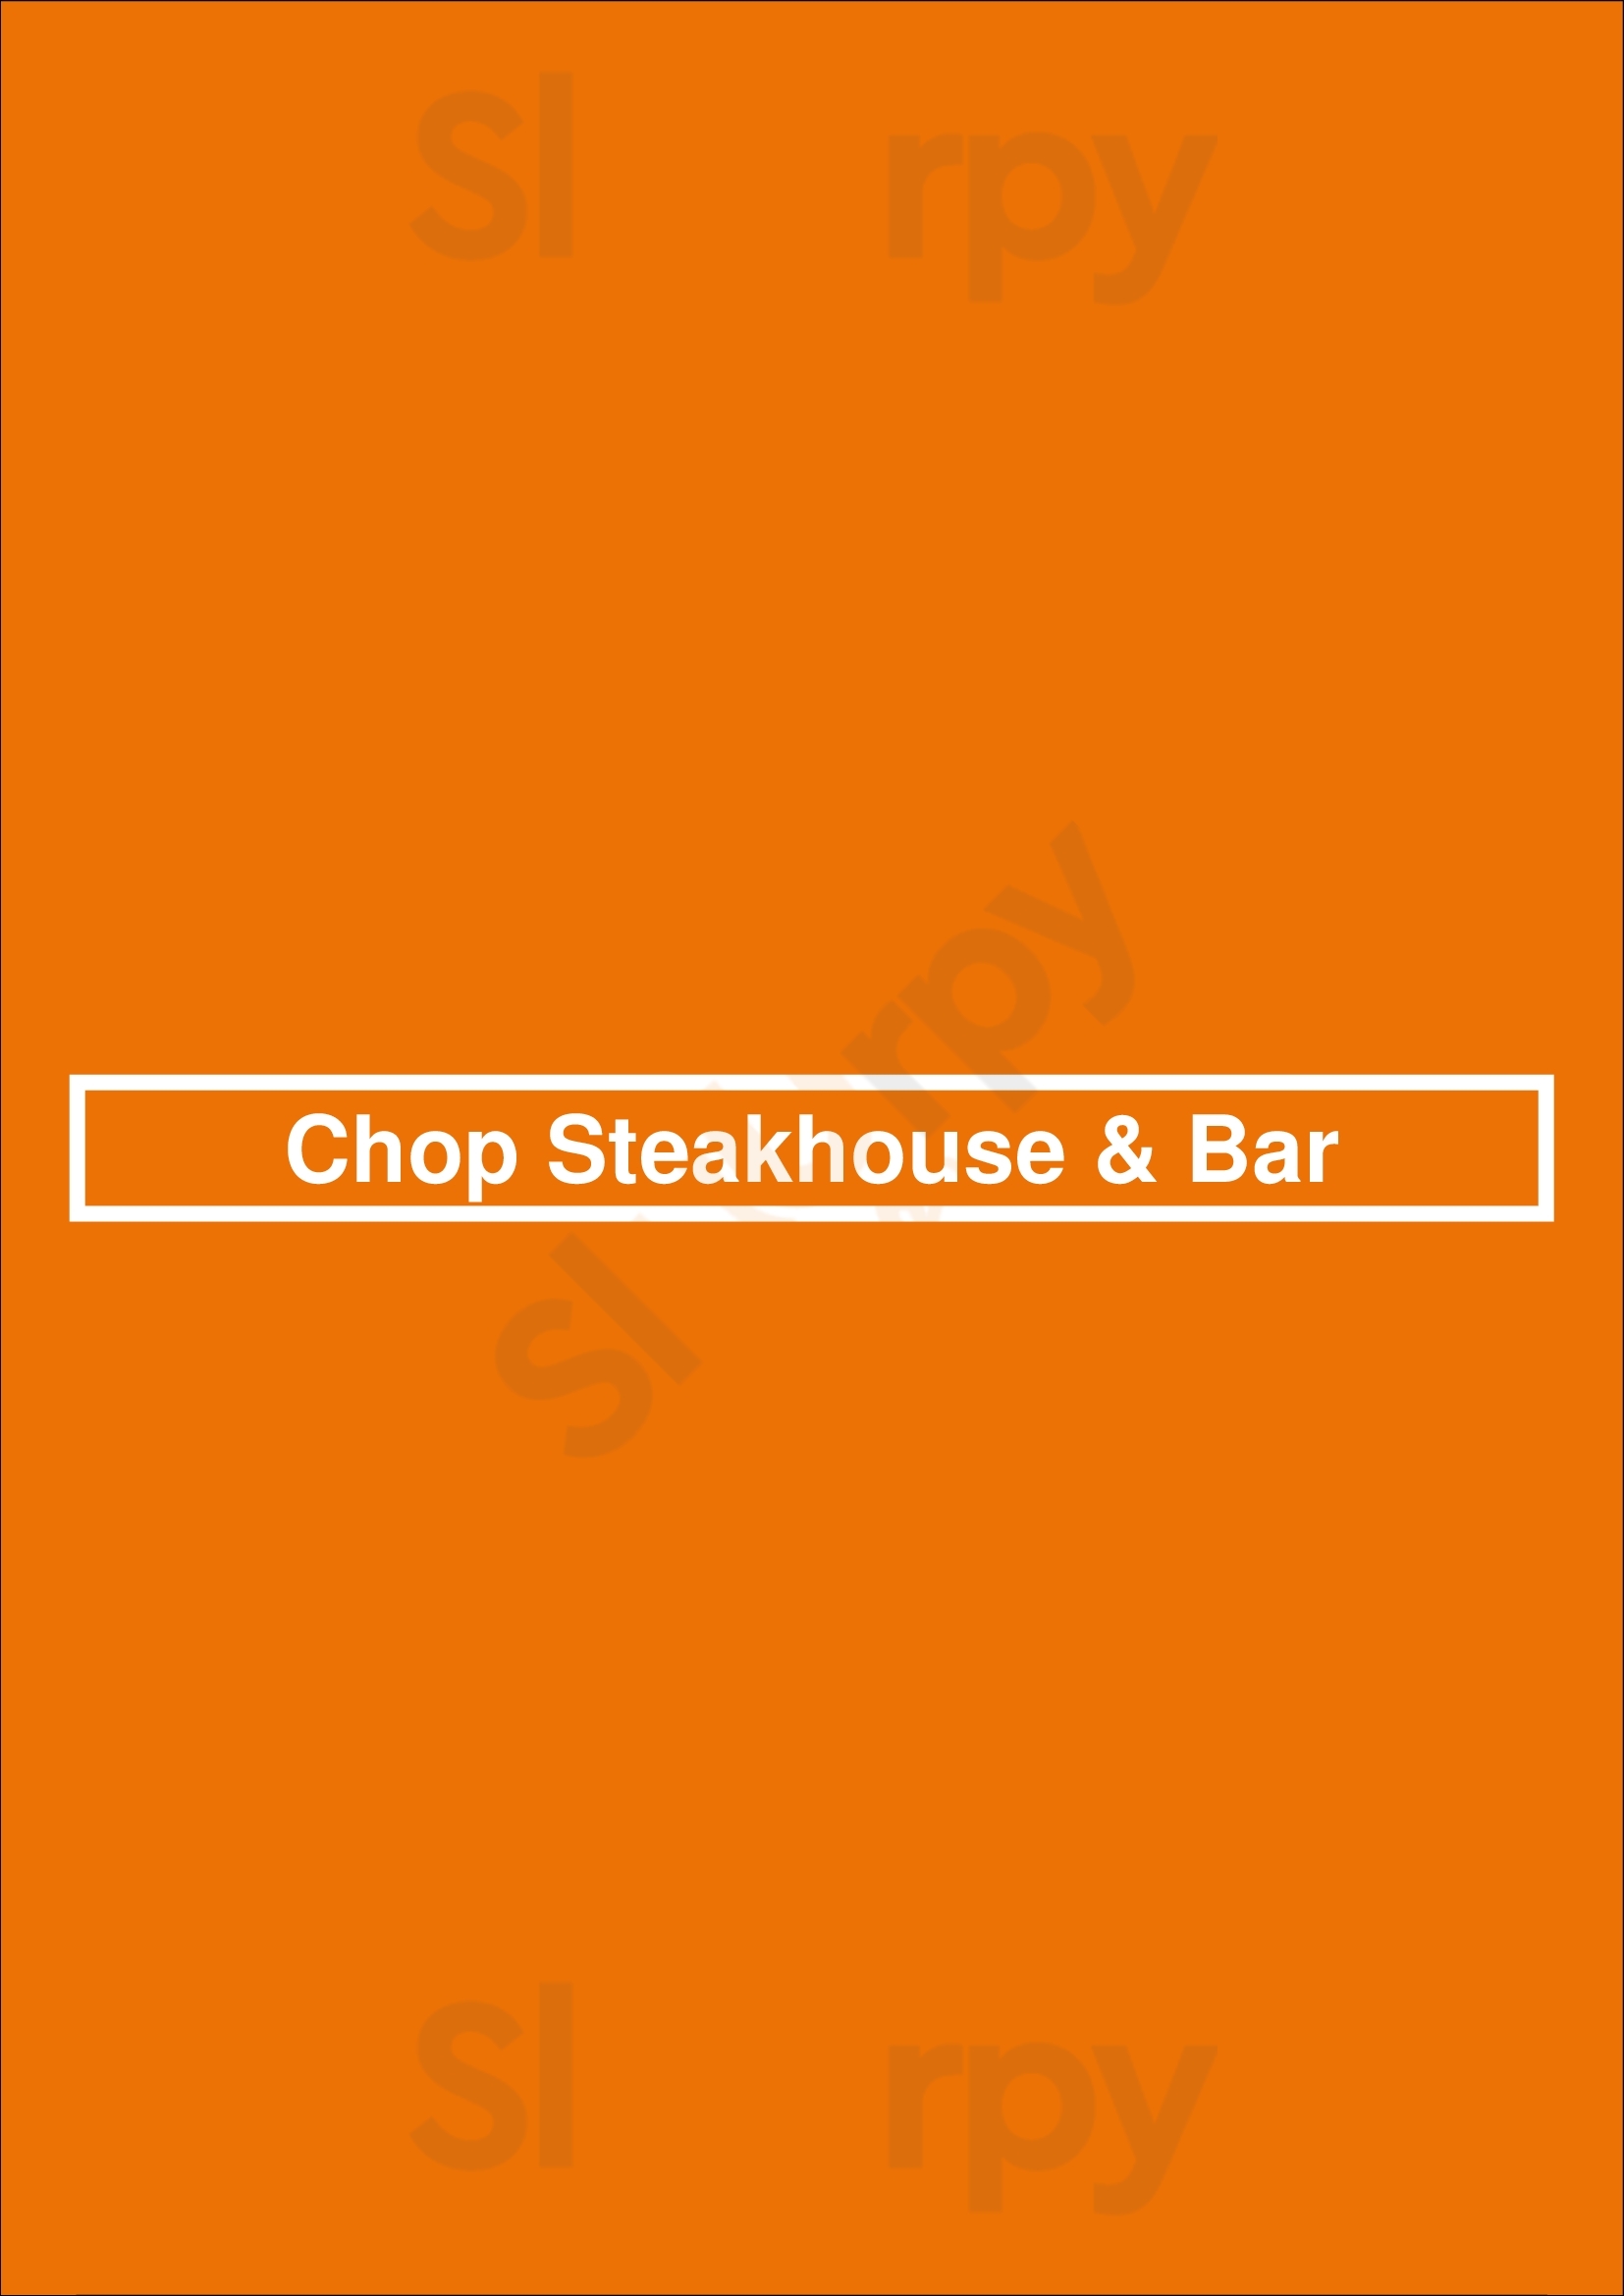 Chop Steakhouse & Bar Edmonton Menu - 1